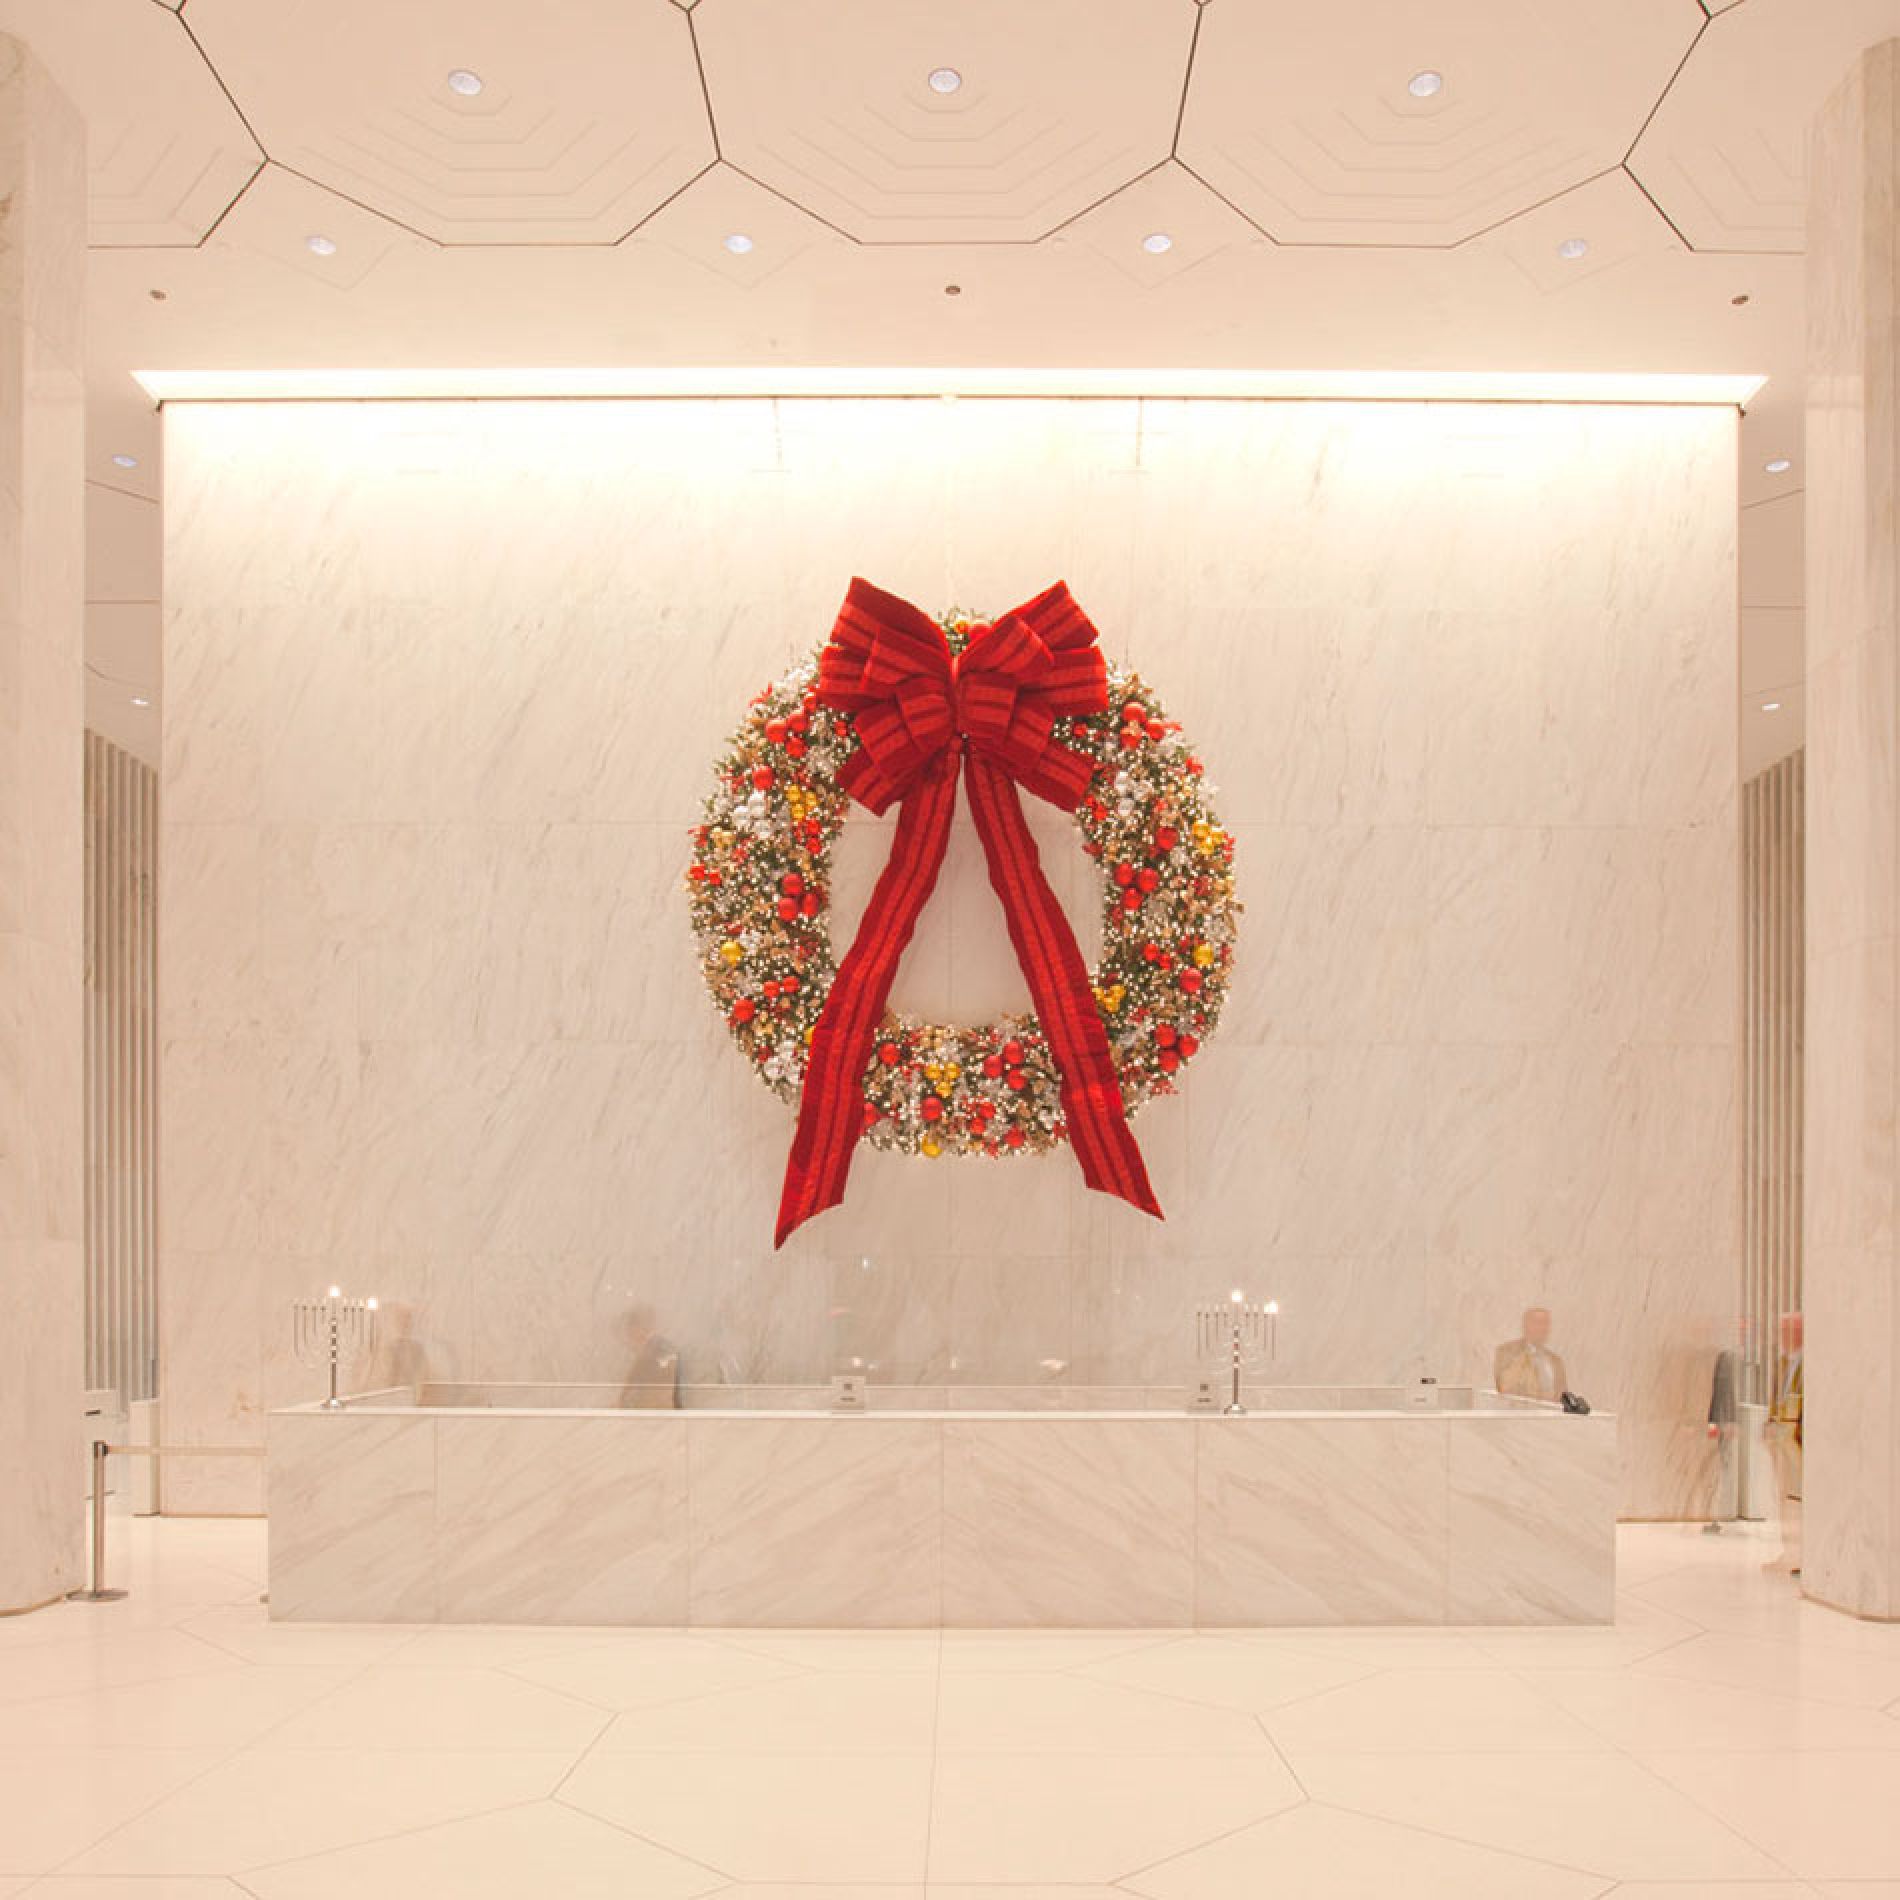 Rockefeller Center Gallery Image